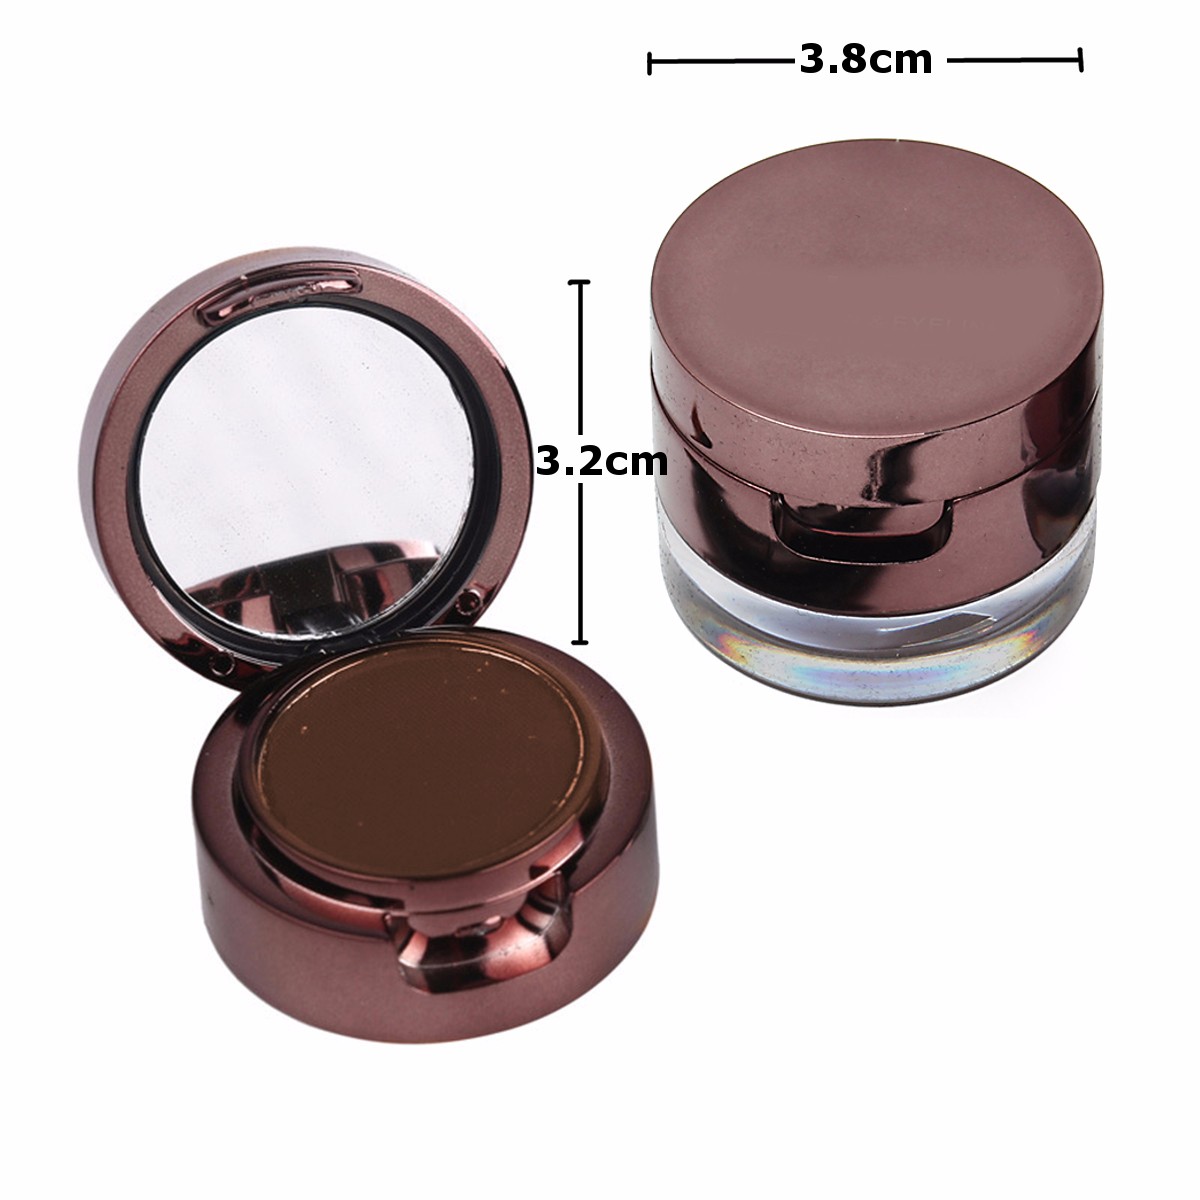 3pcs Waterproof Eyebrow Powder Eyeliner Gel Set With Brush Mirror Black Brown Eye Makeup Kit